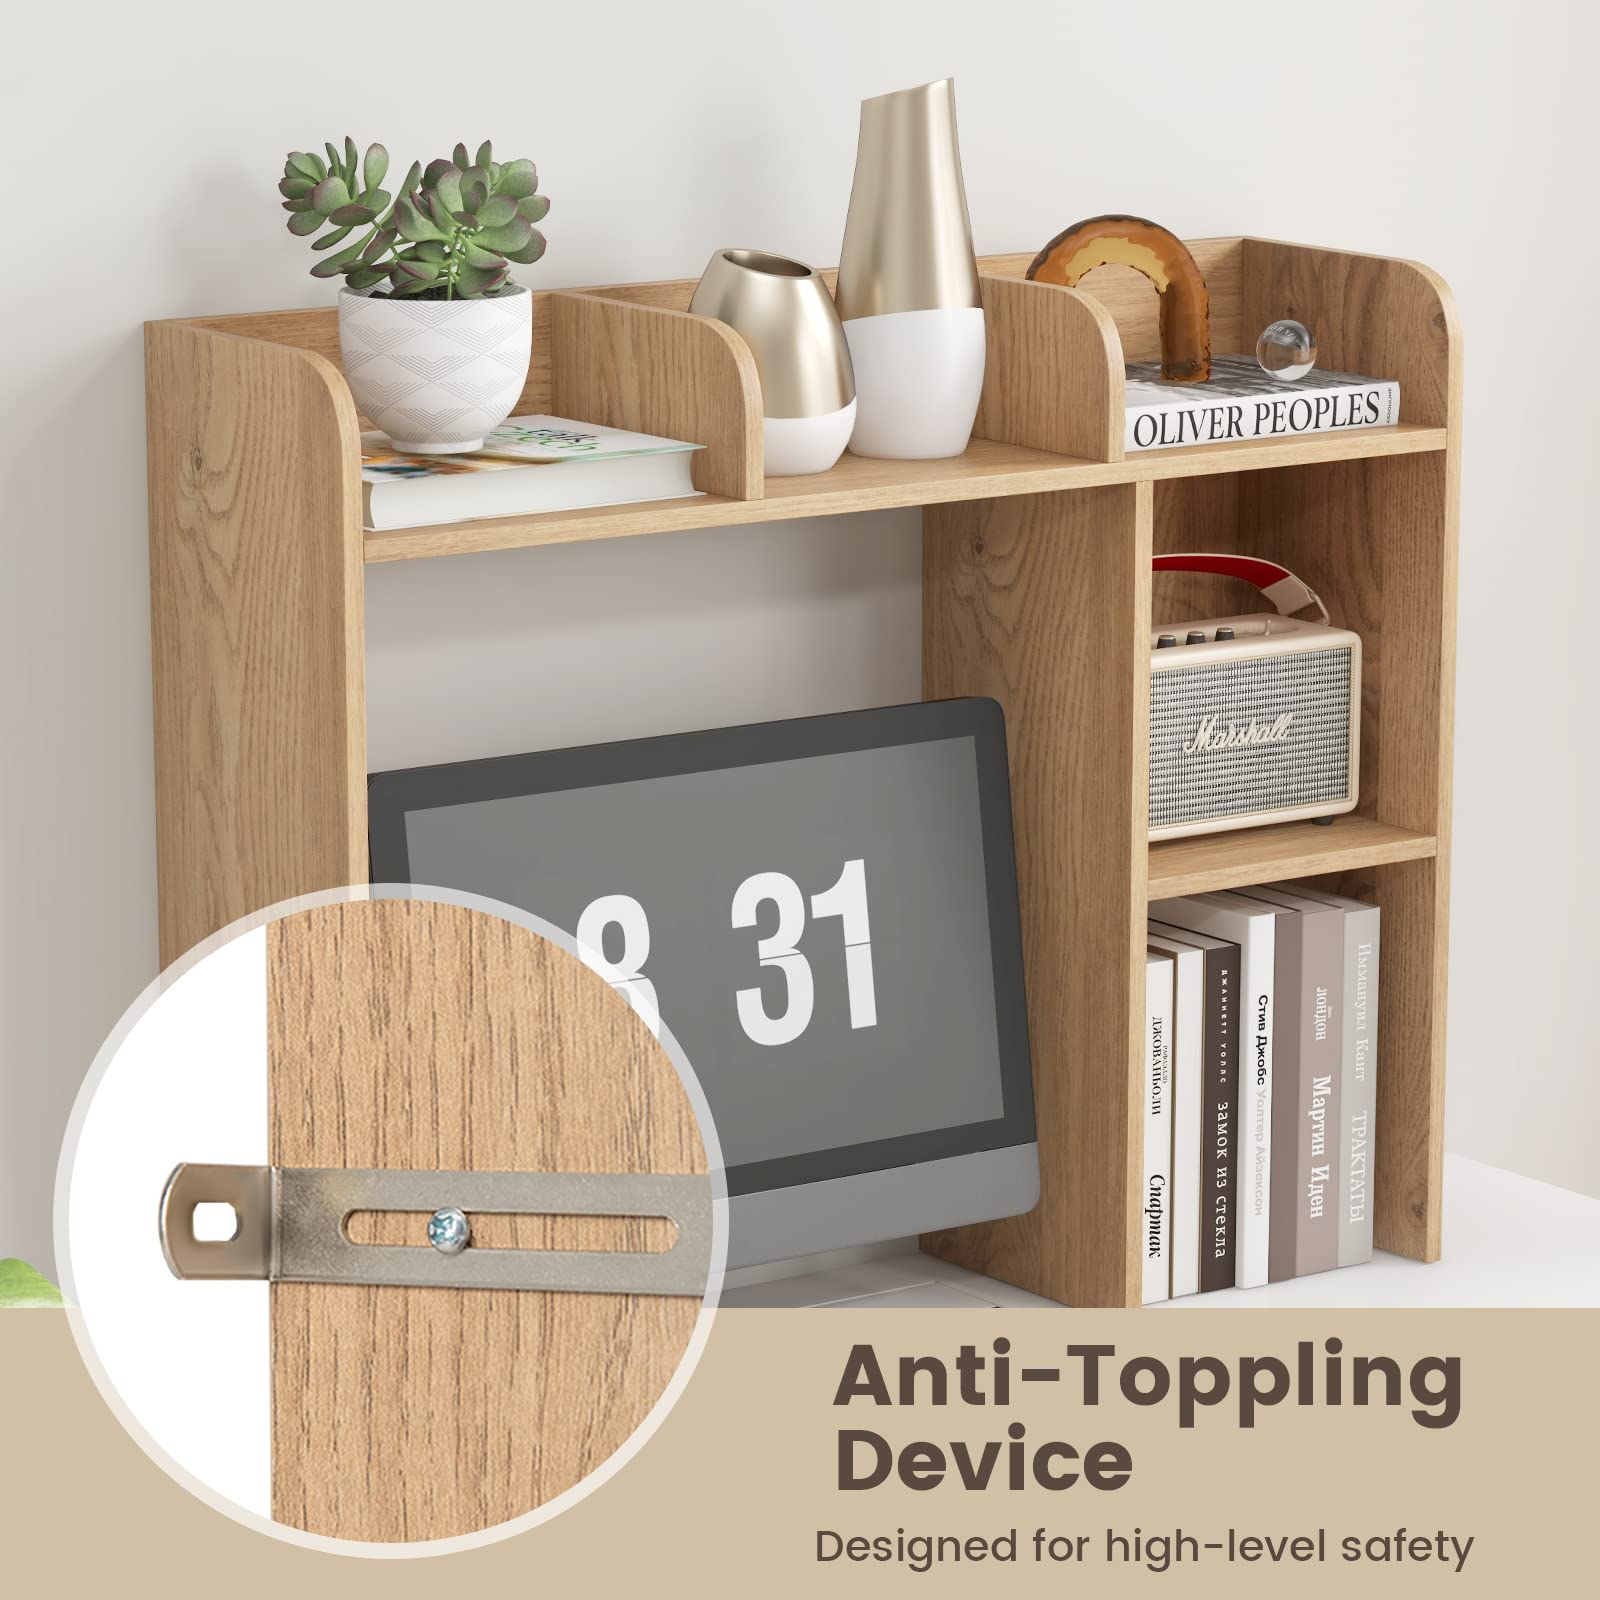 Giantex Desktop Bookshelf, Wood Desk Hutch Organizer for 27 Inch Computer Monitor